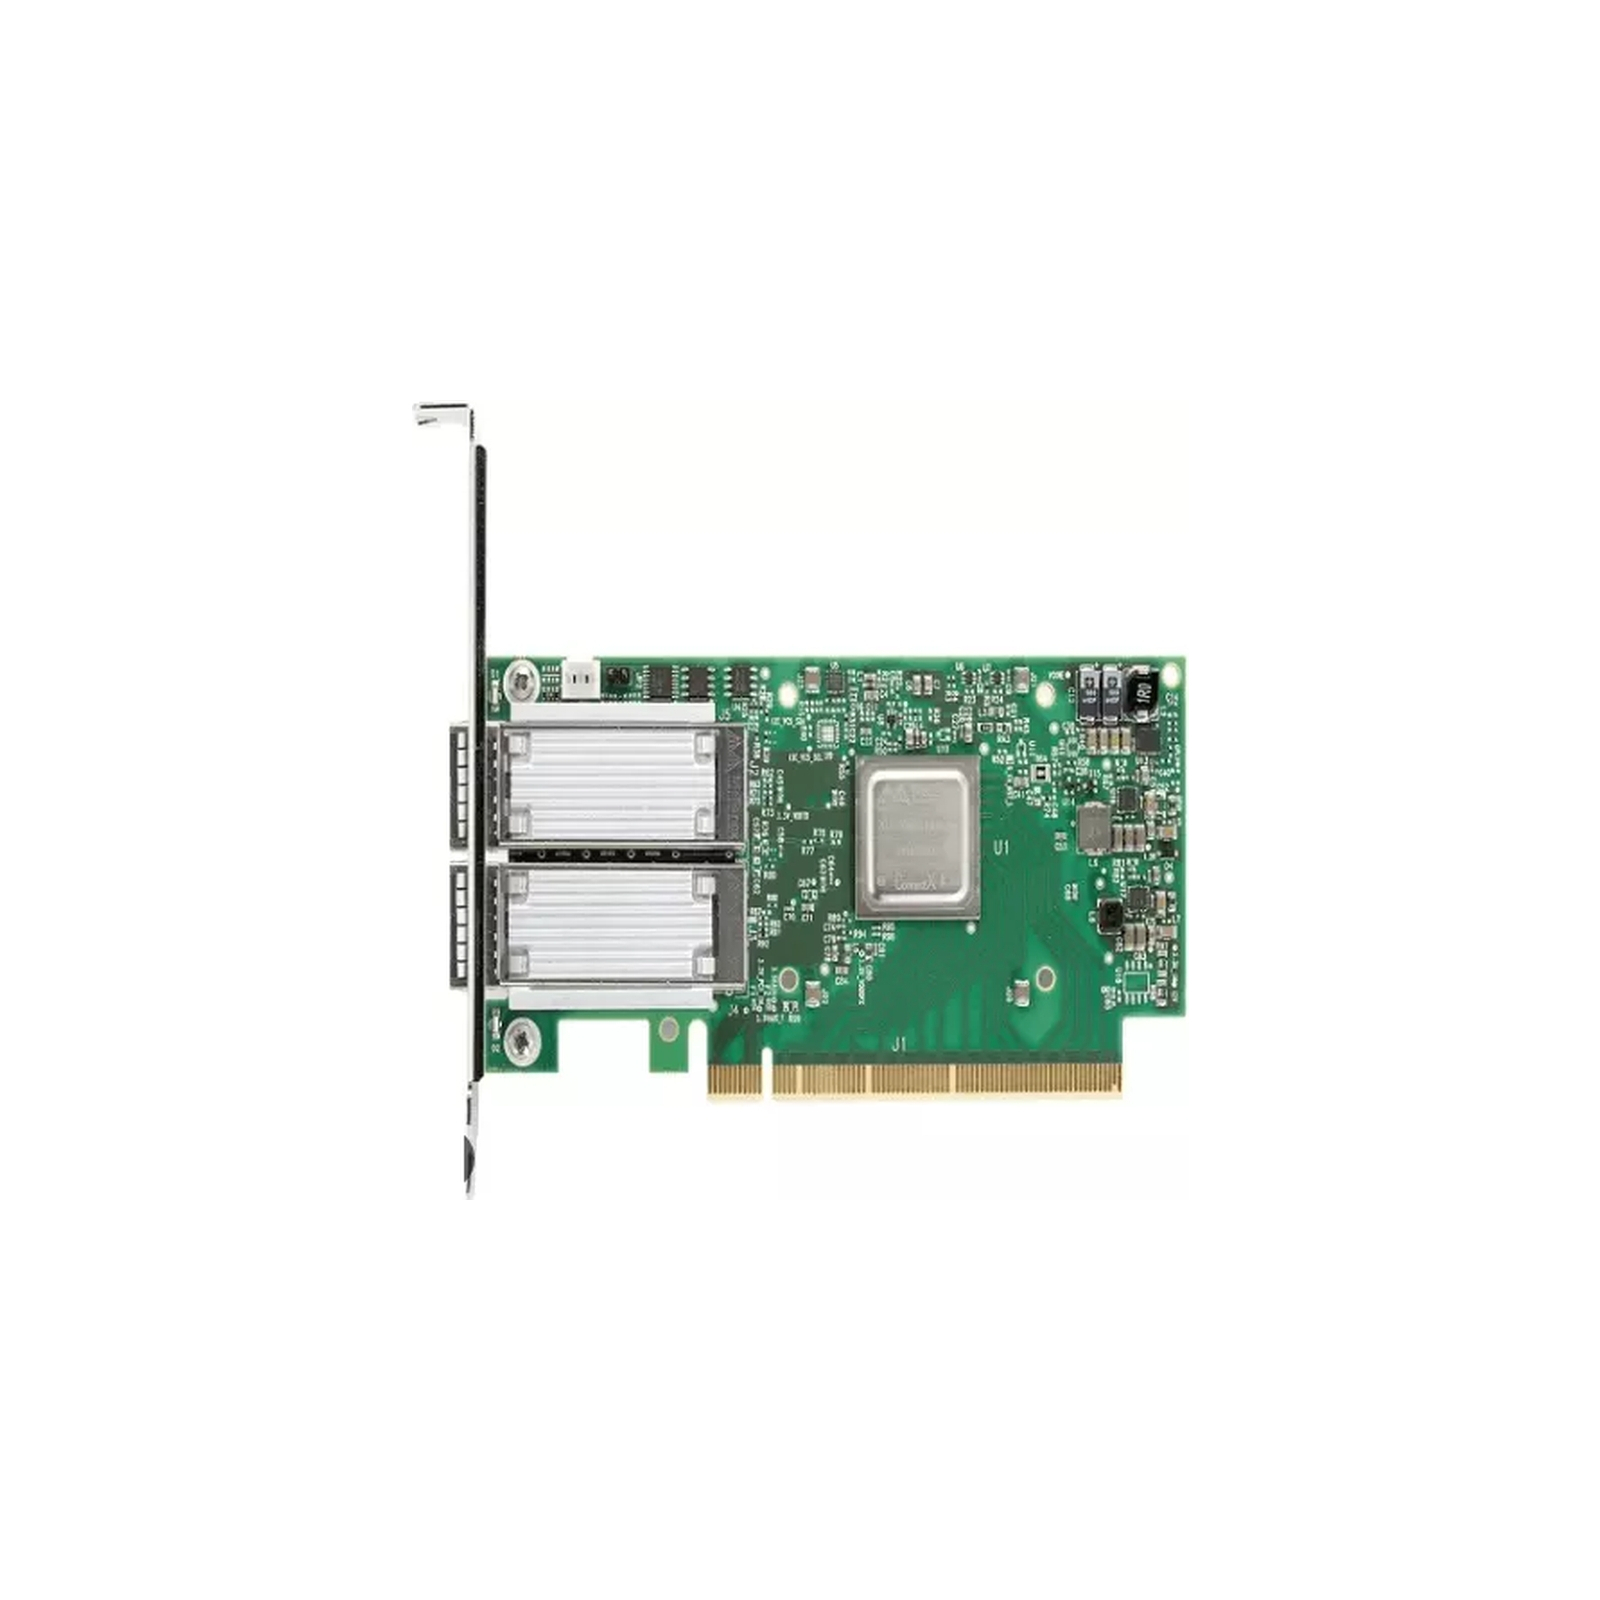 Сетевая карта Dell Mellanox ConnectX-5 Dual Port 10/25GbE SFP28 Adapter, PCIe Full Height, V2 (540-BDIZ)